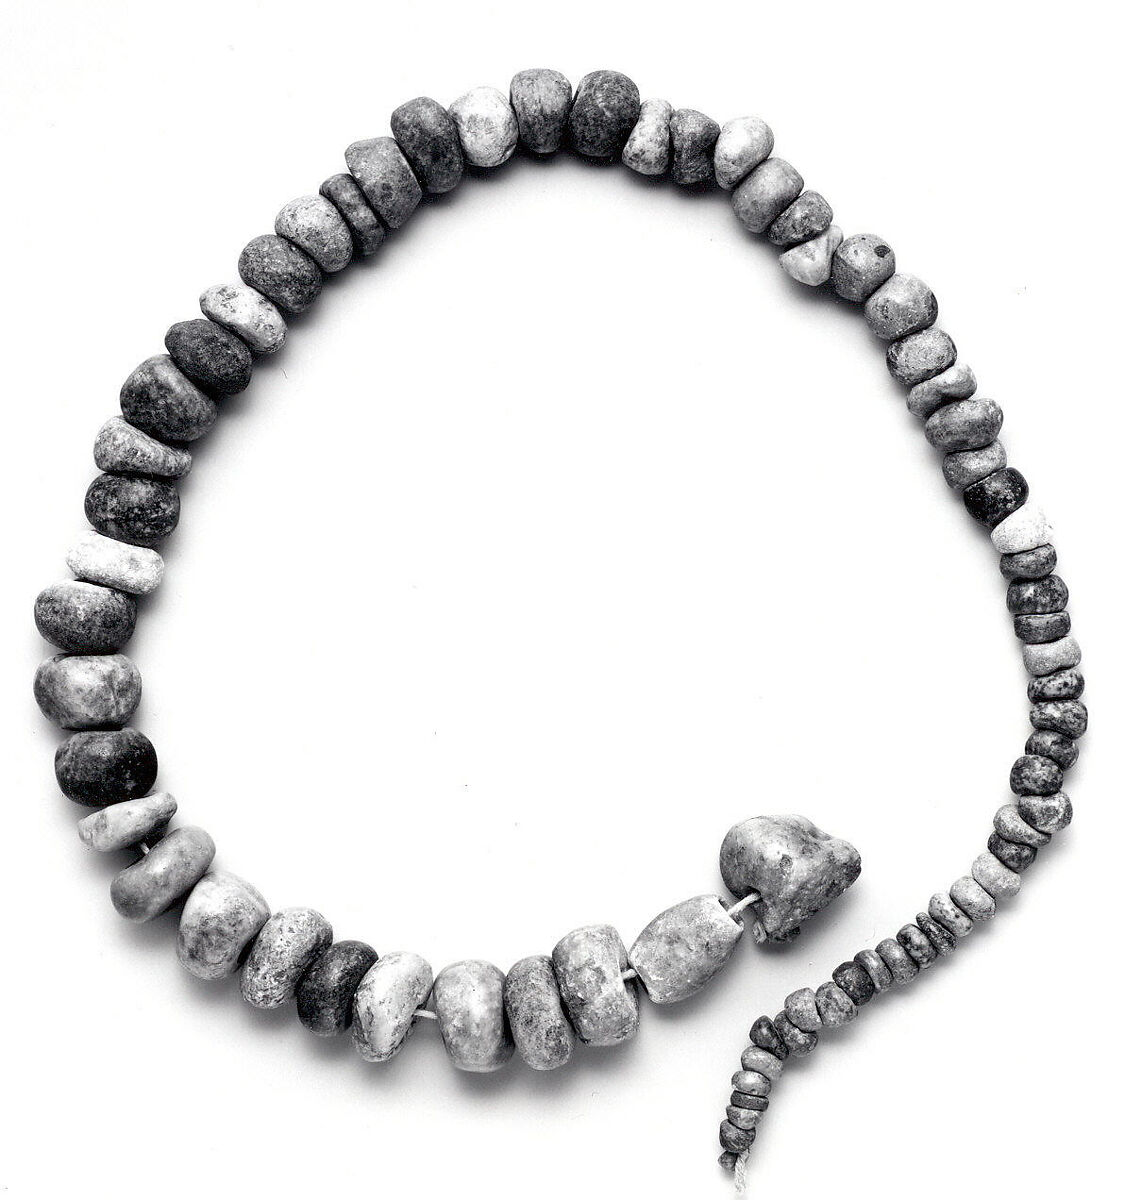 Necklace of stone beads, Stone, Guerrero 